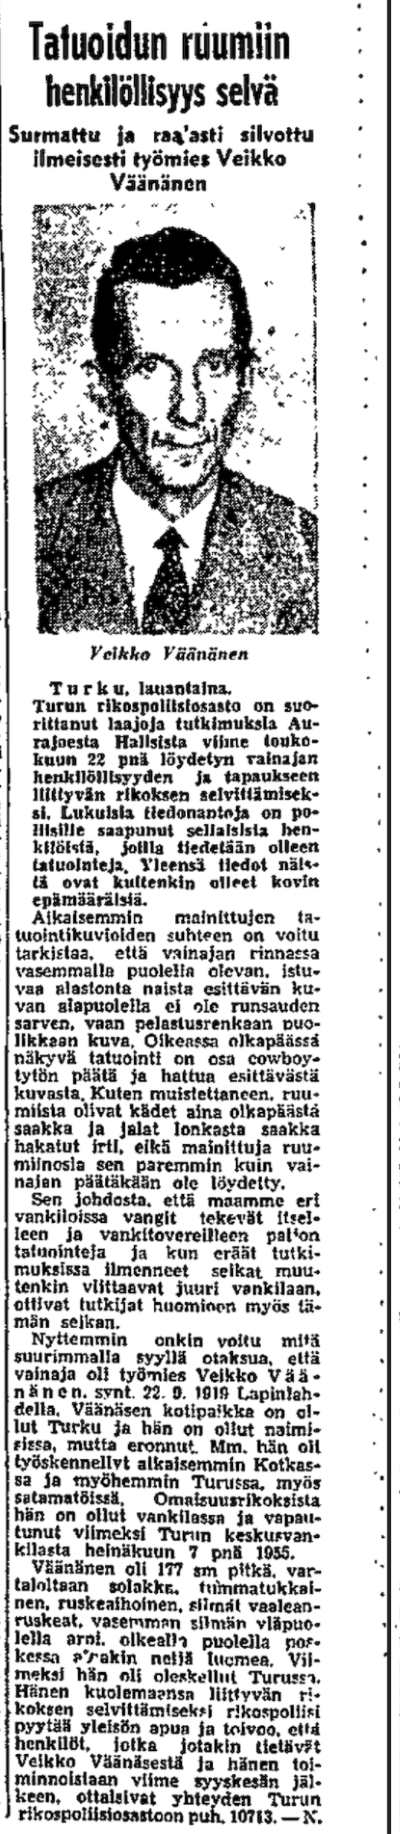 HS 10.06.1956 Veikko Väänänen.jpg